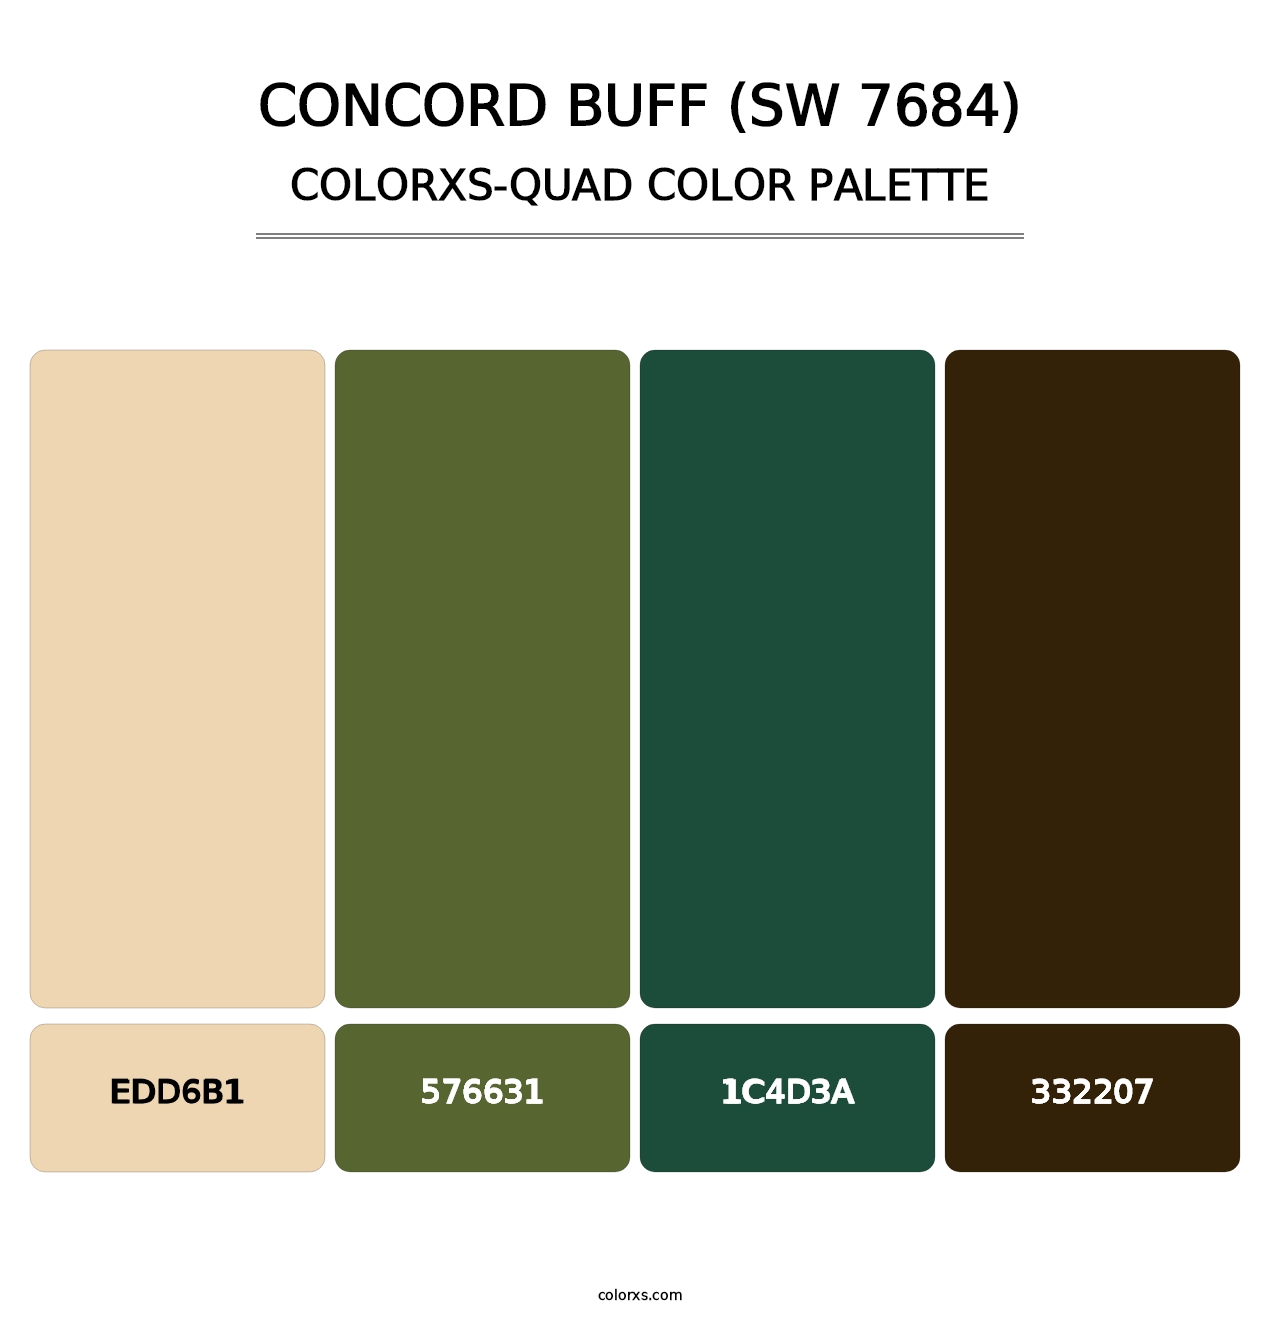 Concord Buff (SW 7684) - Colorxs Quad Palette